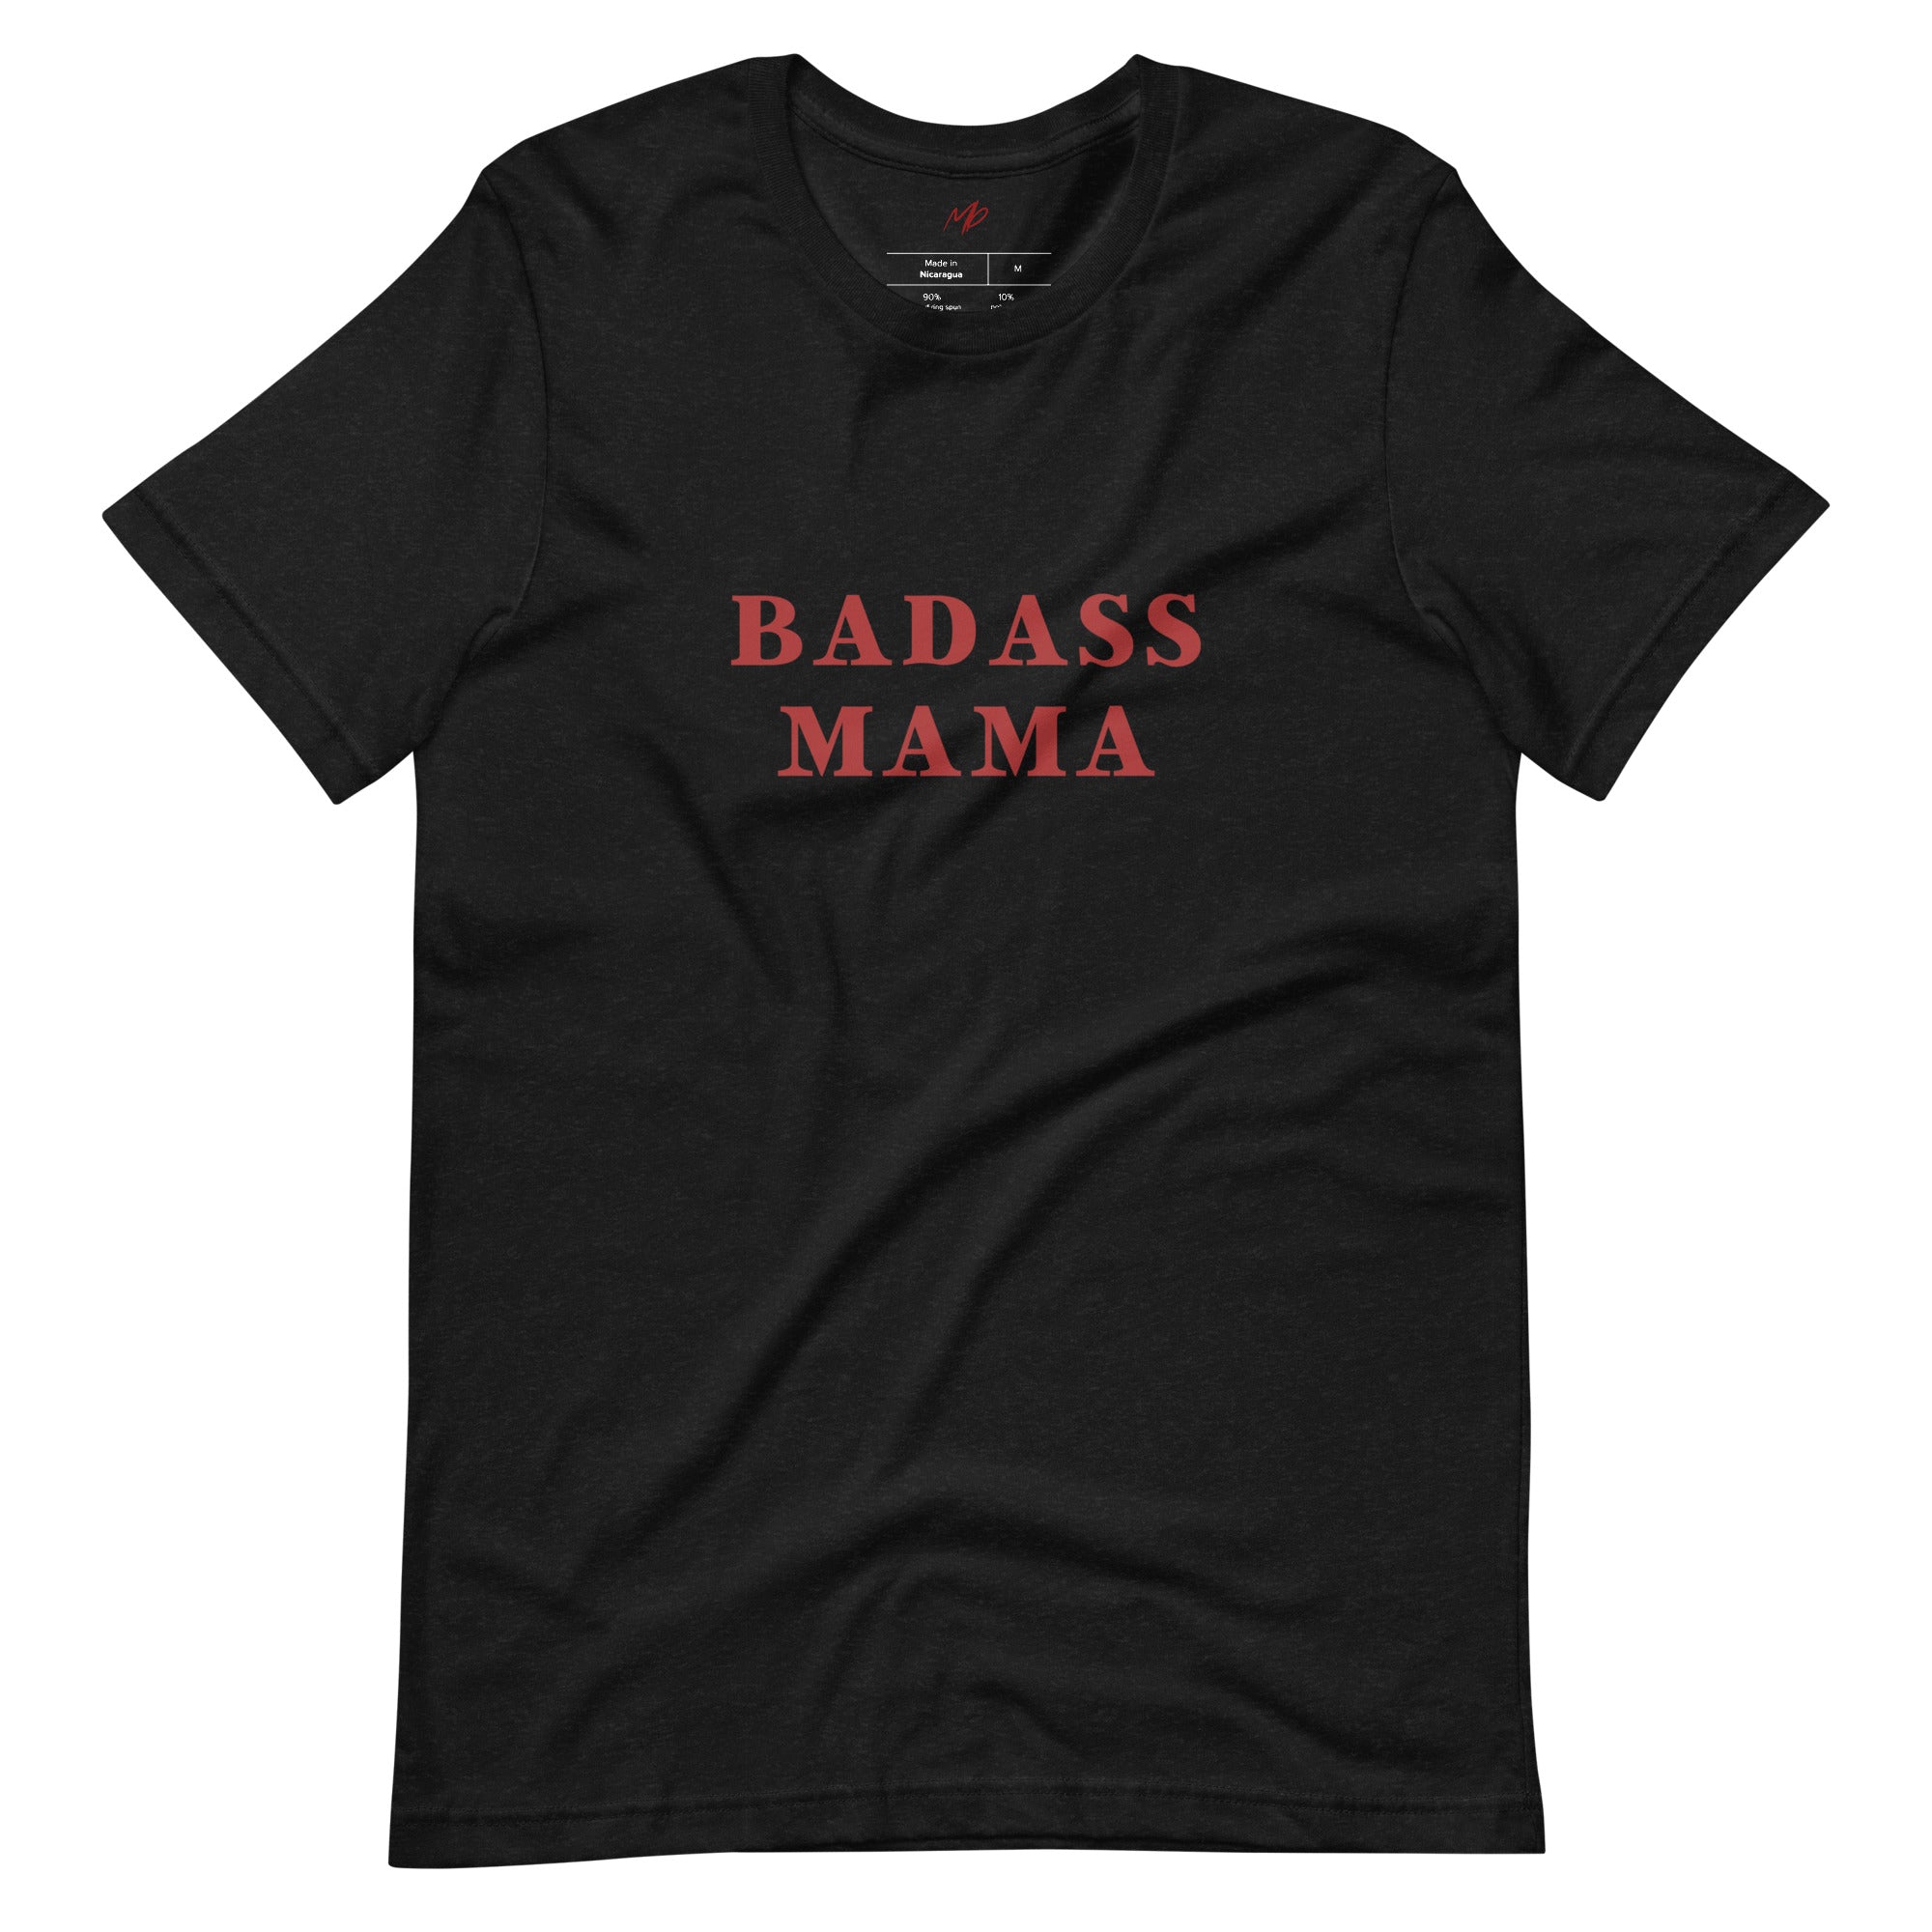 Badsss Mama T-Shirt